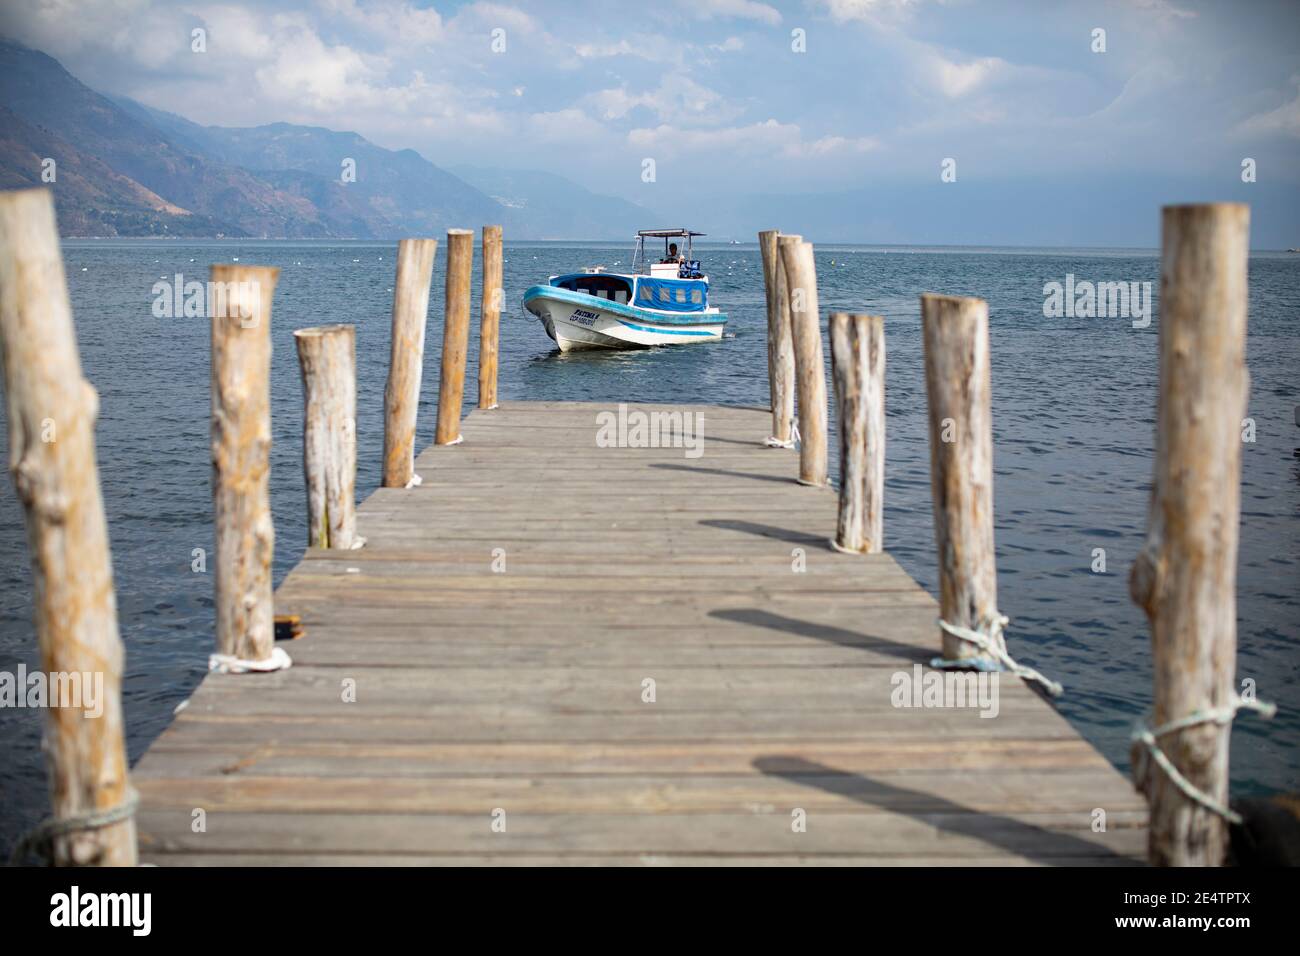 Beautiful scenery on Lake Atitlán, Guatemala, Central America. Stock Photo